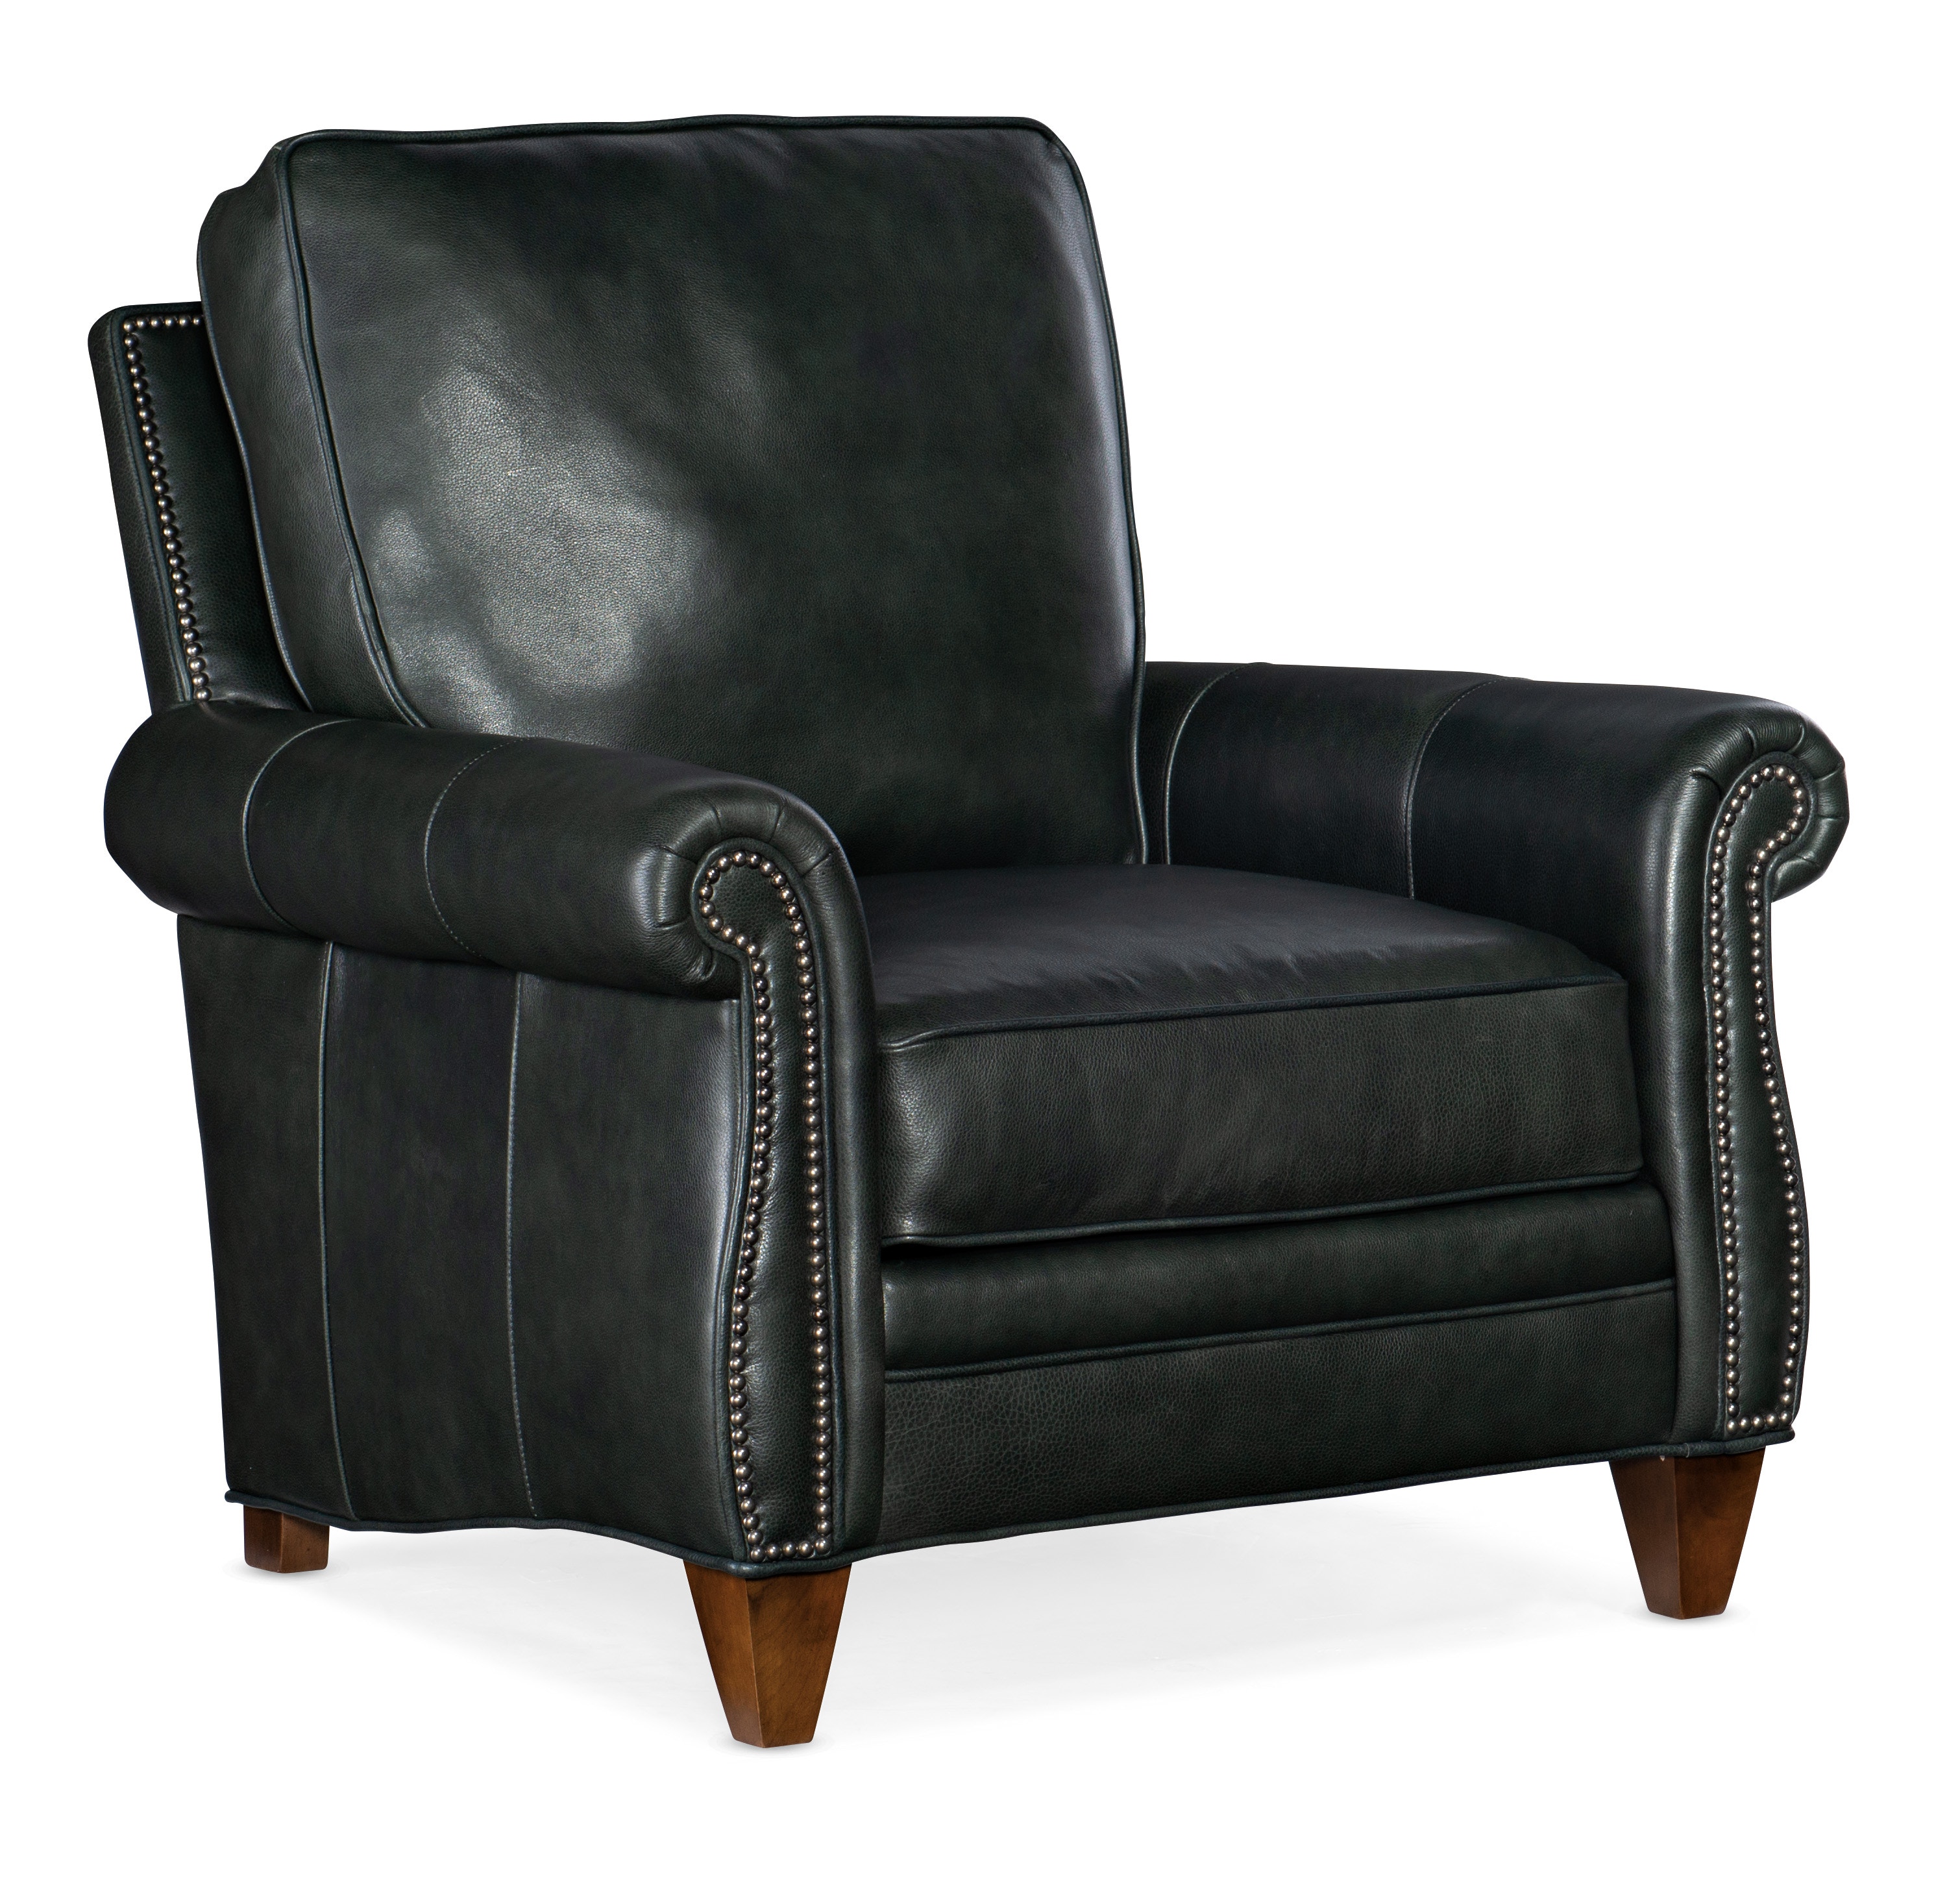 Bradington Young Living Room Reddish Stationary Chair 8-Way Hand 